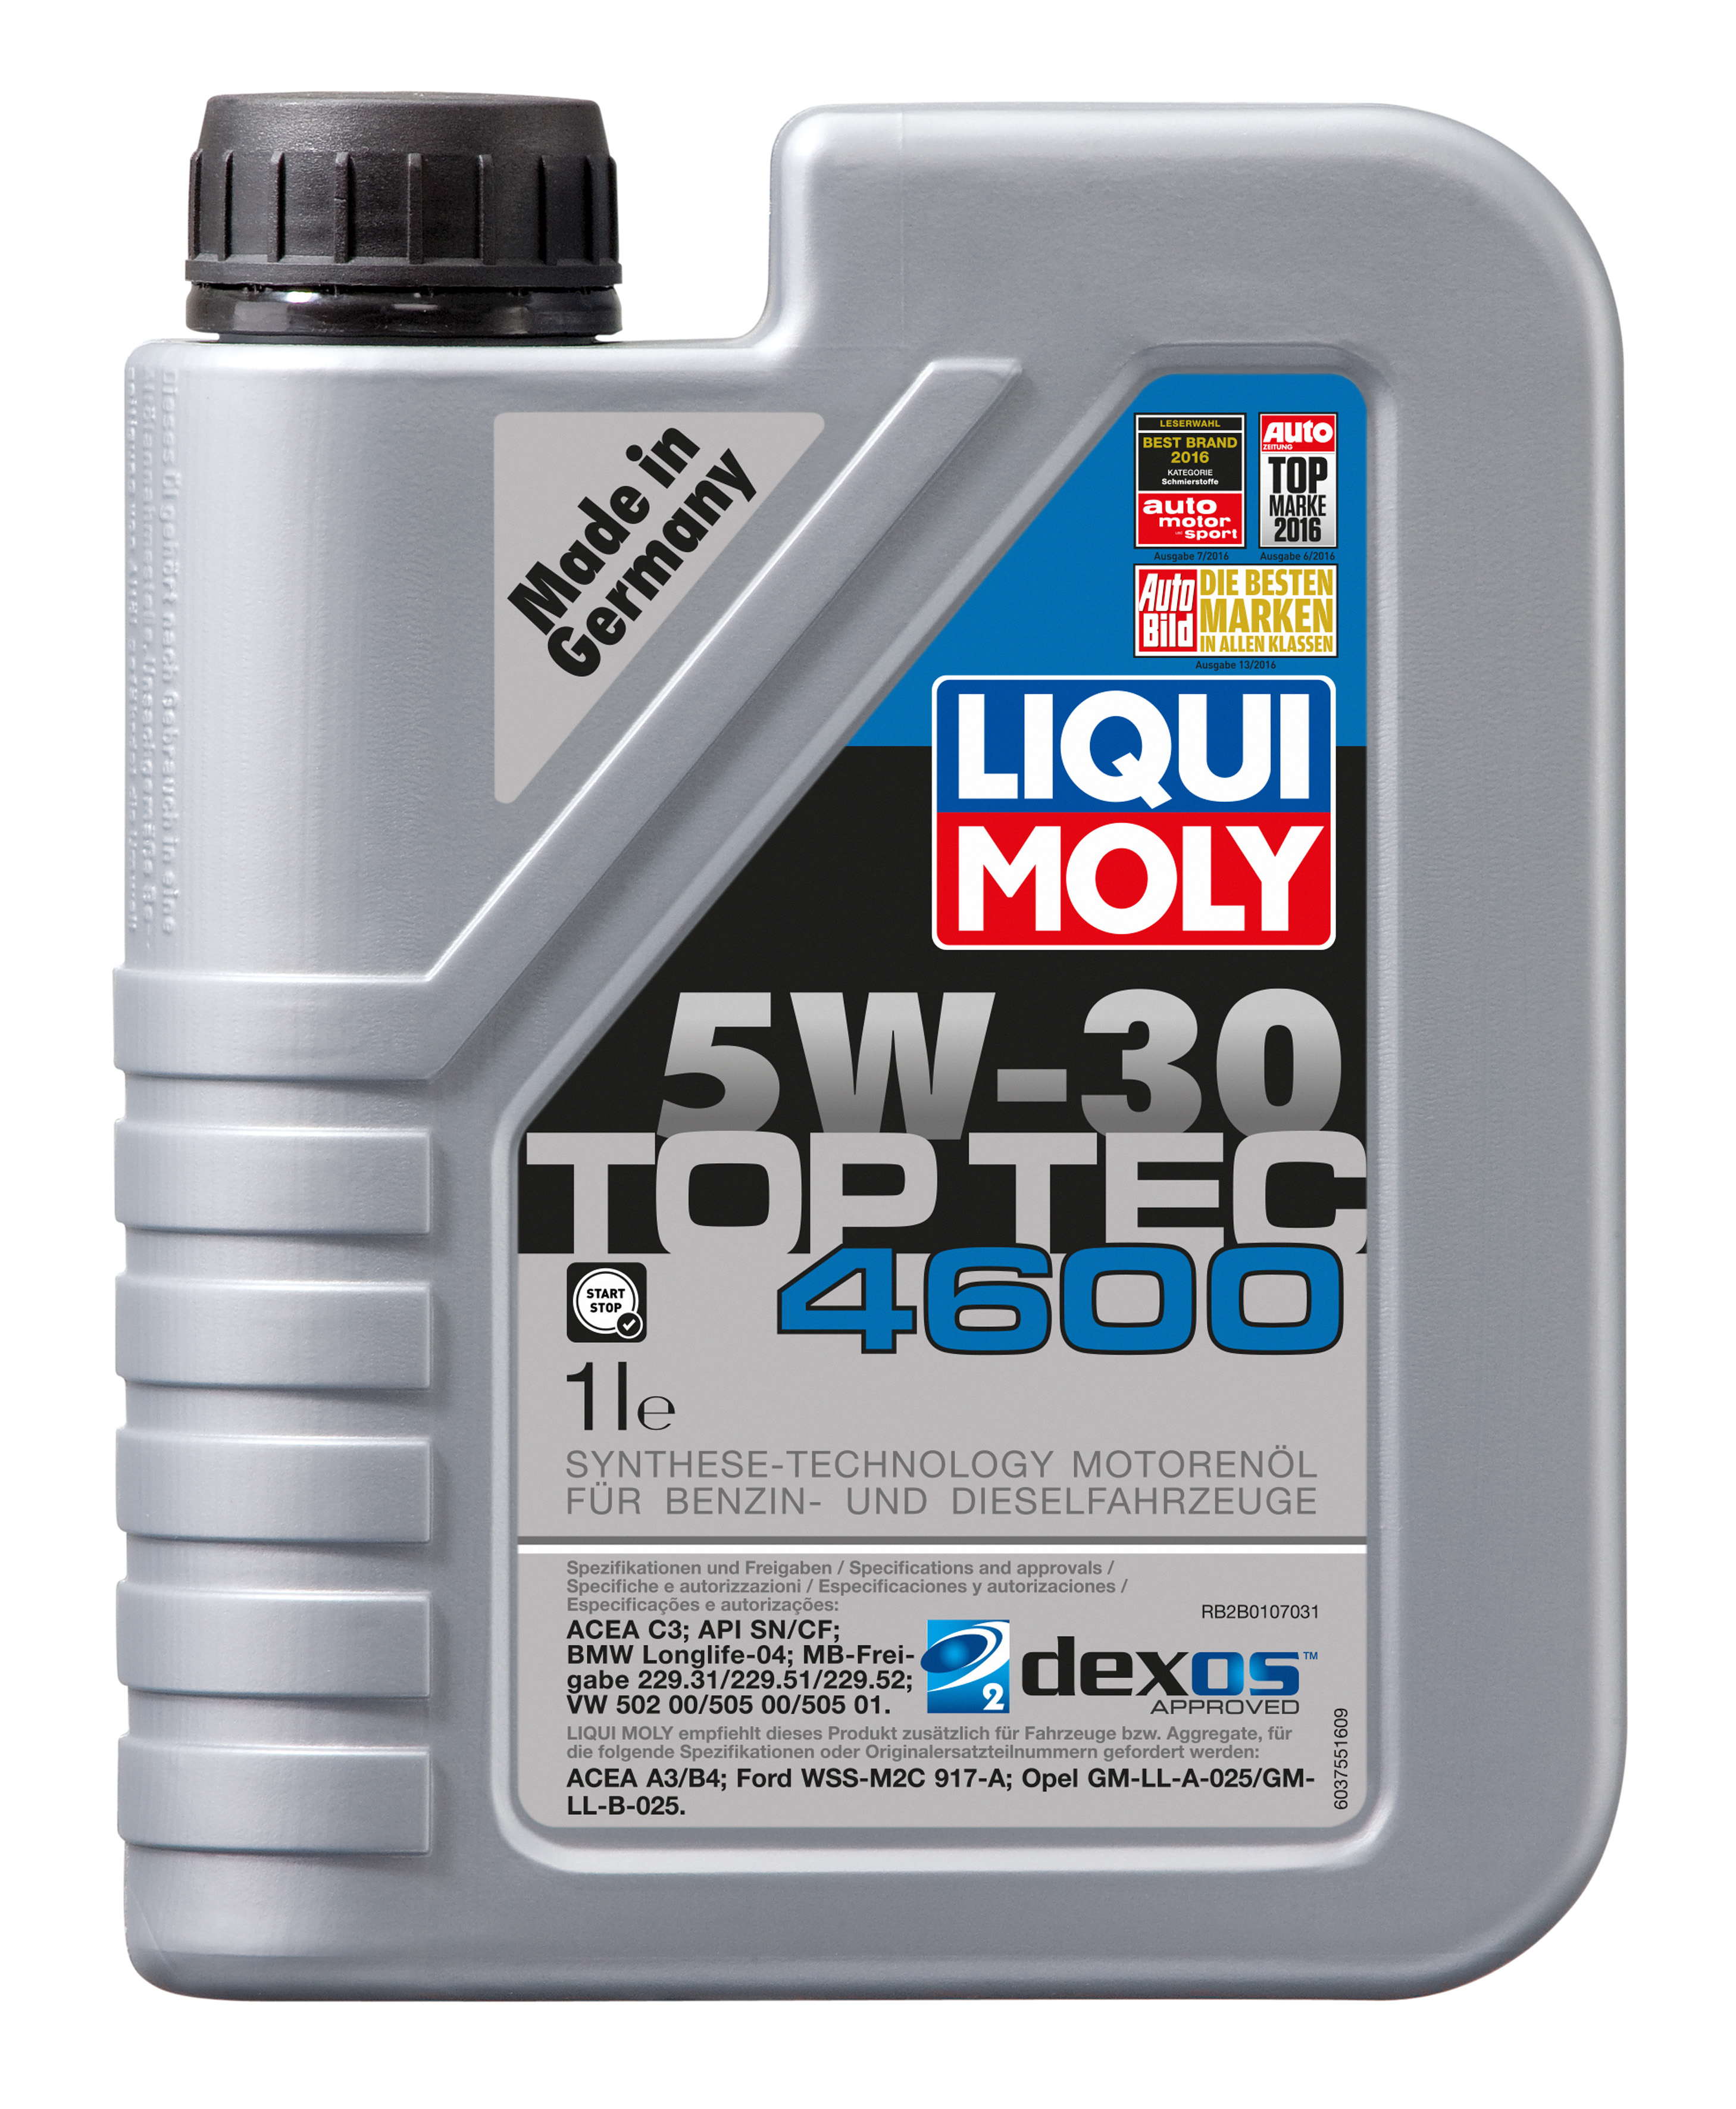 5L LIQUI MOLY TOP TEC 4600 5W-30 Motoröl + BOSCH Ölfilter für OPEL 93156300  